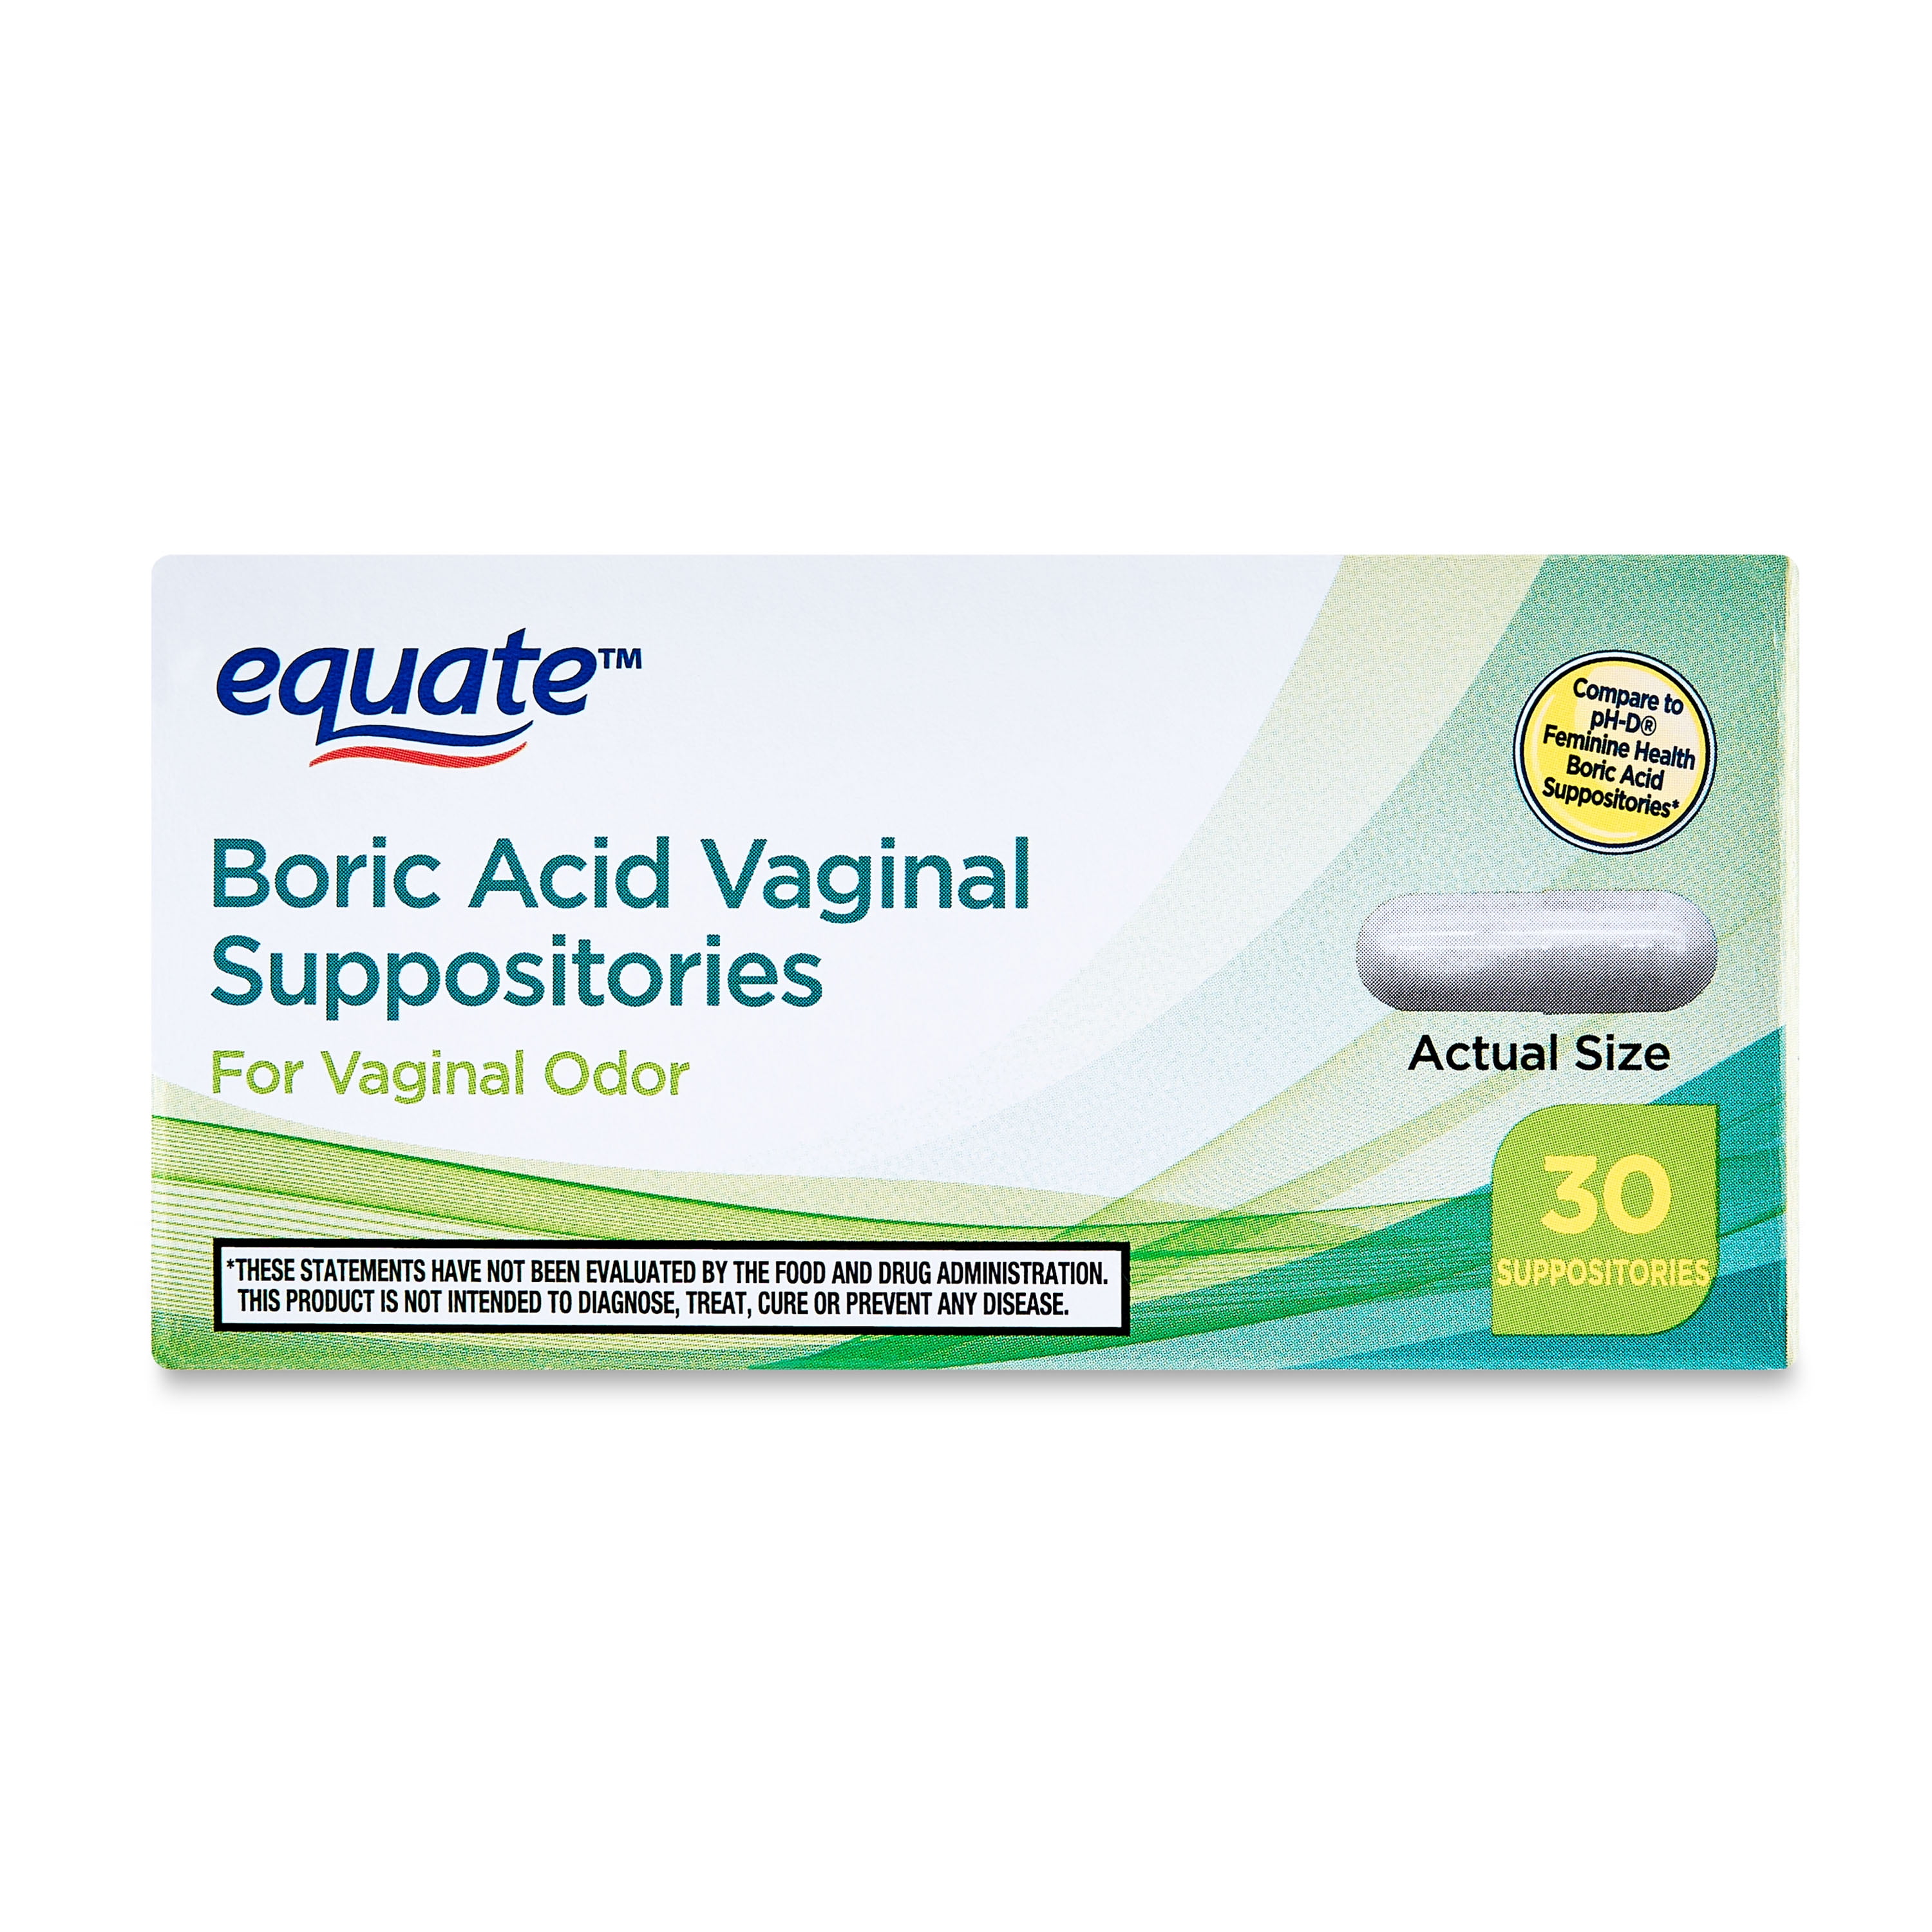 Equate Boric Acid Vaginal Suppositories for Vaginal Odor, 30 ct